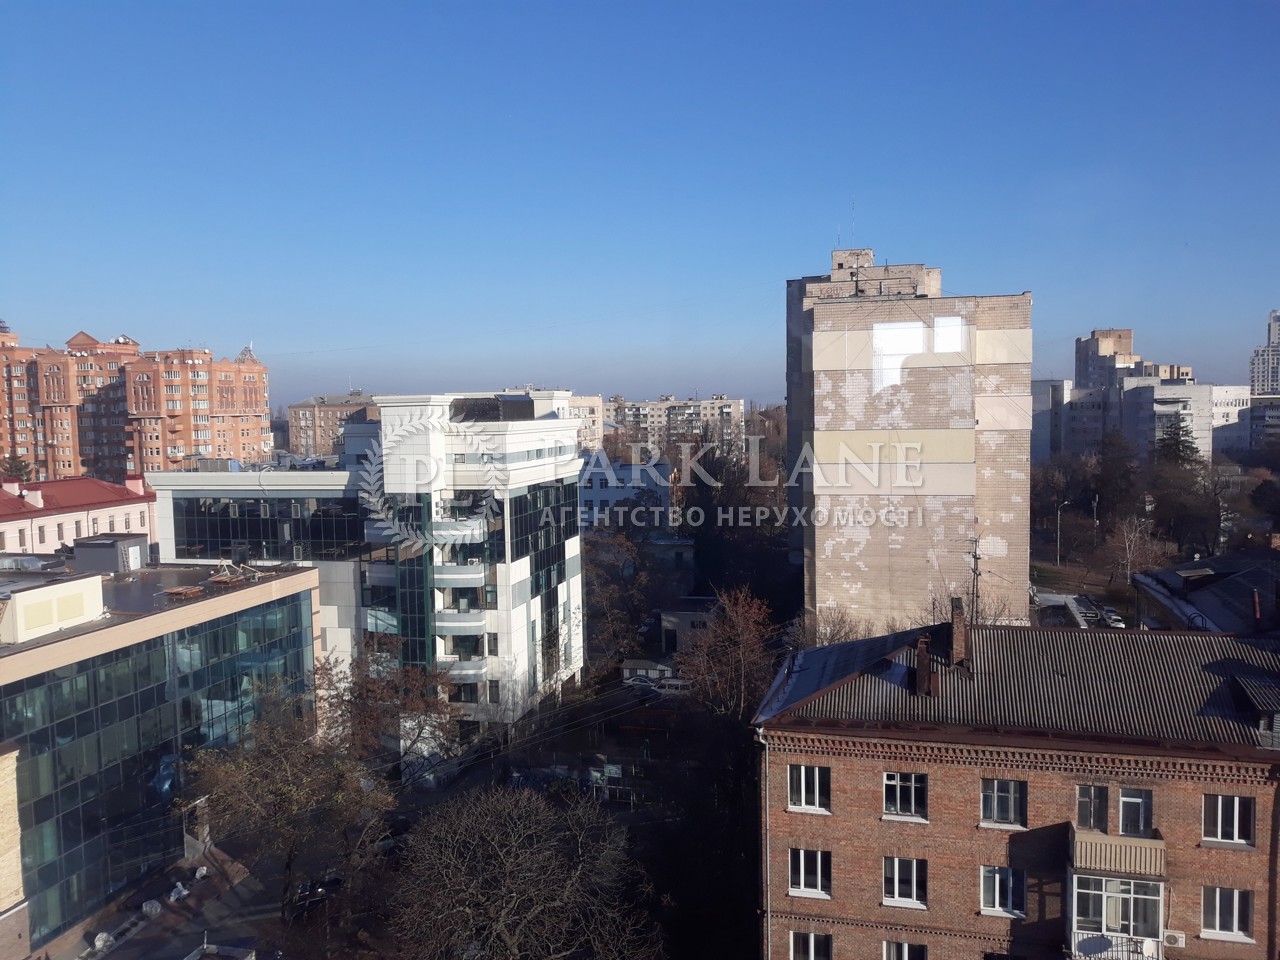  Офис, ул. Деревлянская (Якира), Киев, Z-763380 - Фото 8